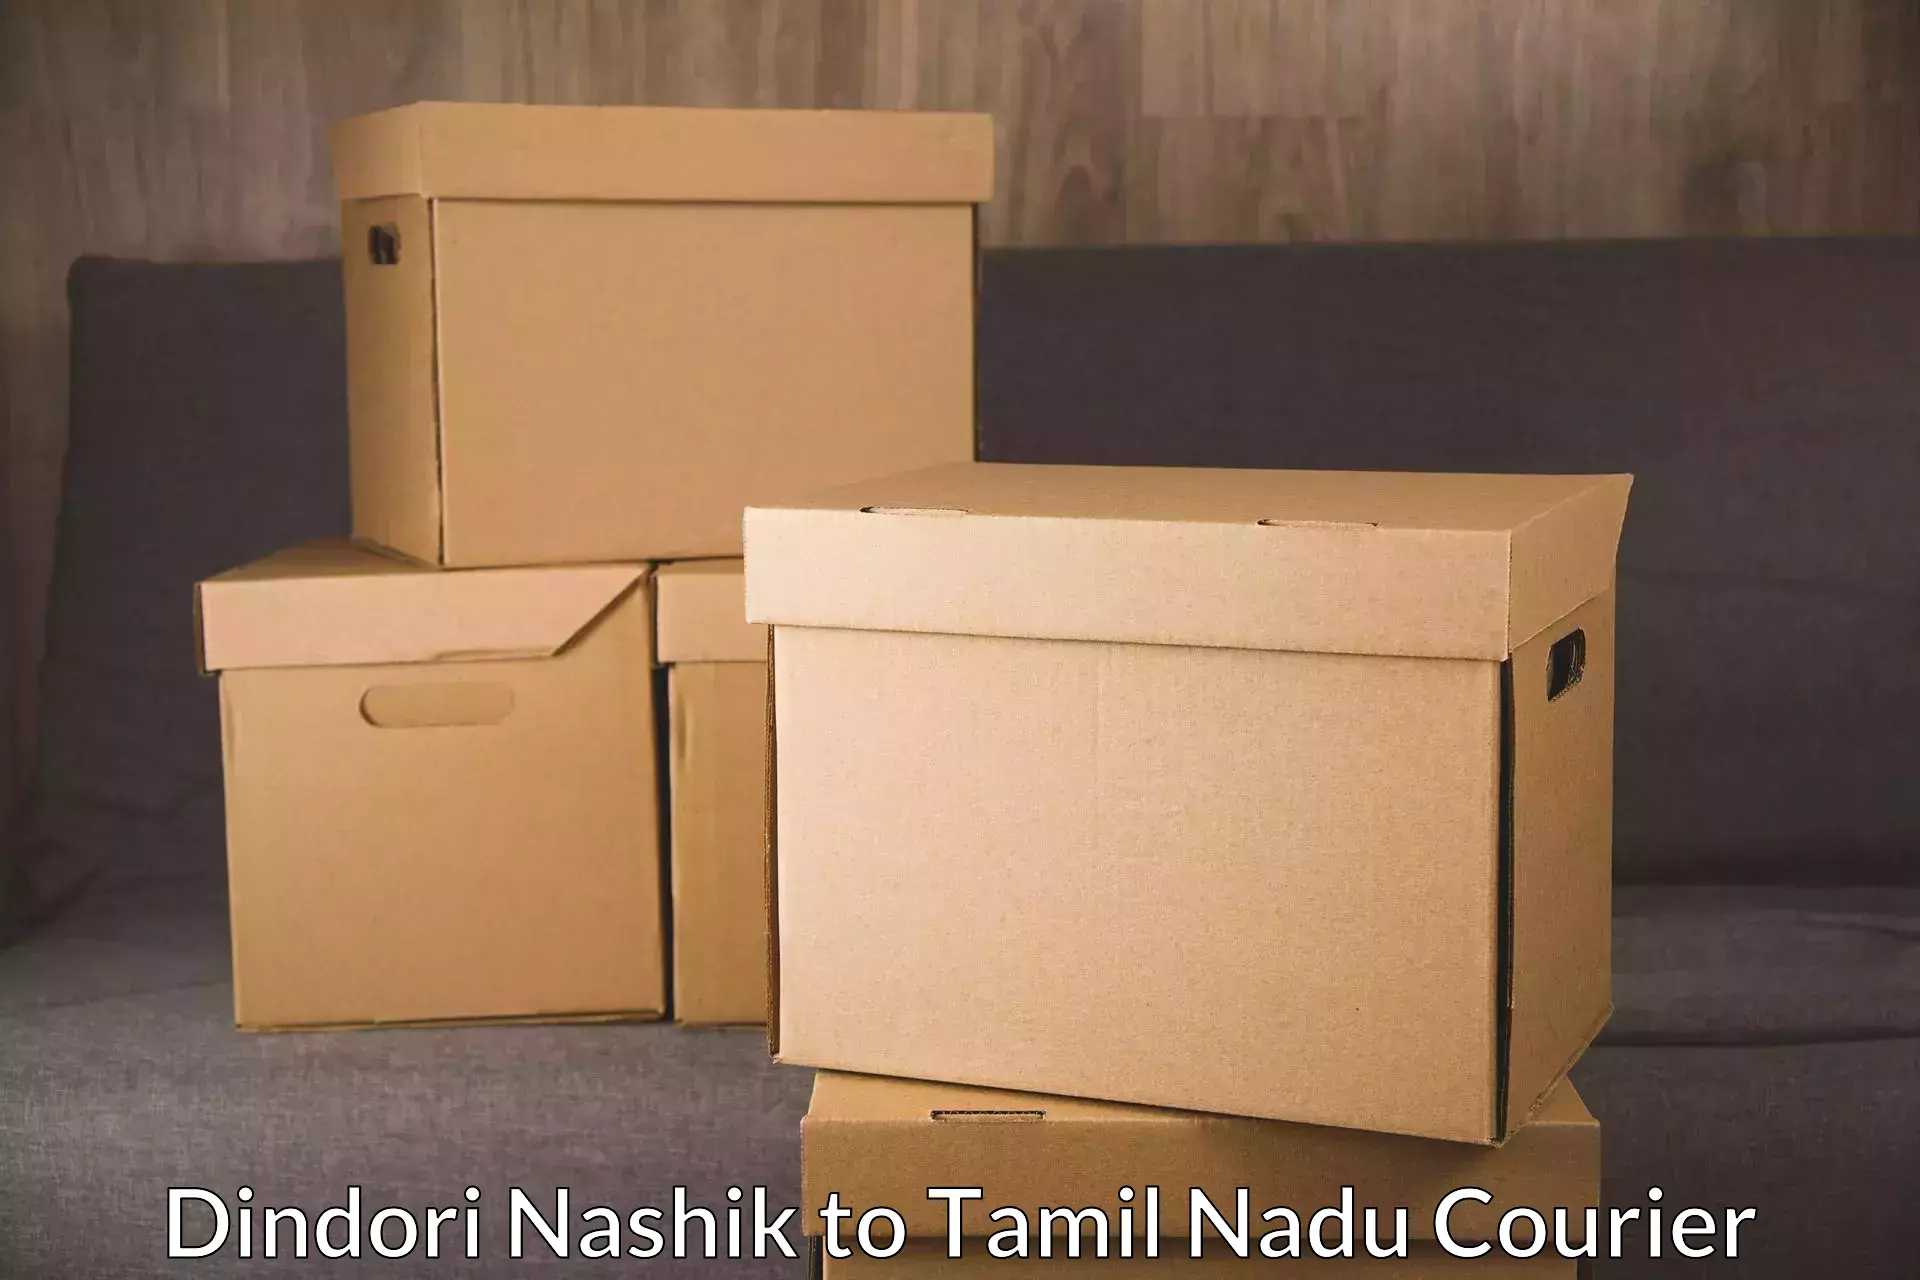 International parcel service Dindori Nashik to Chennai Port